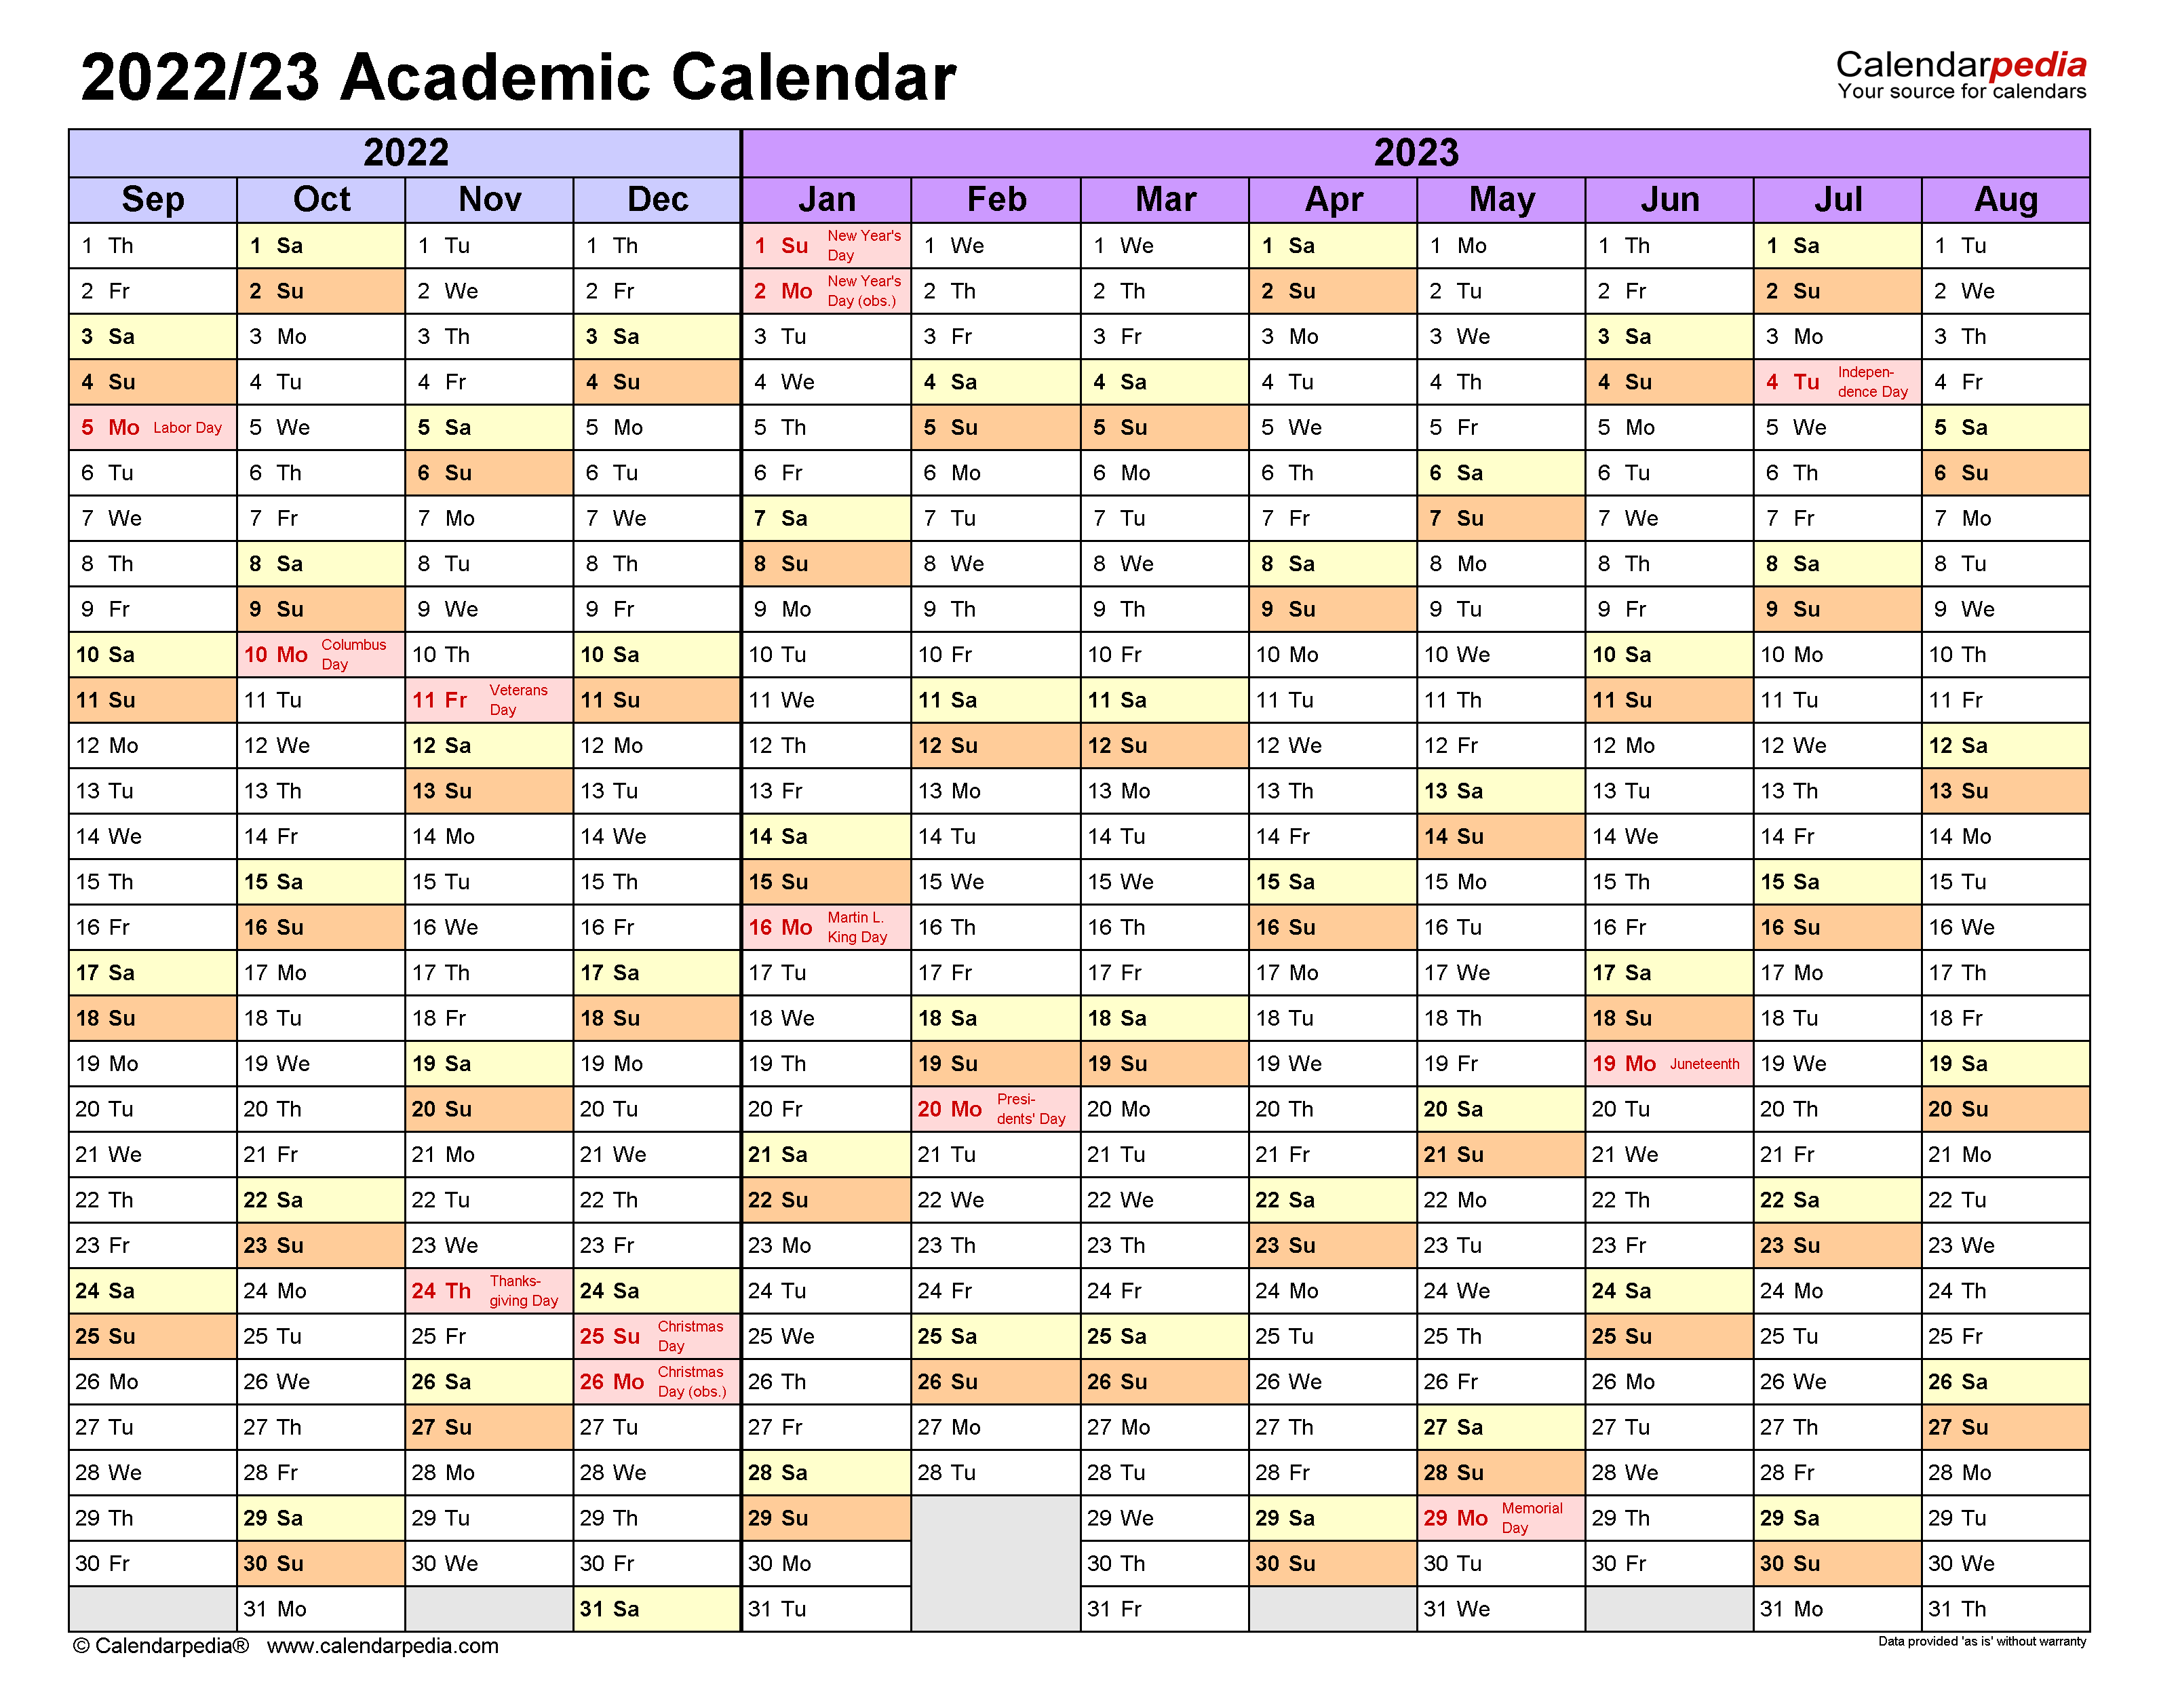 Grand Canyon University Academic Calendar 2022 23 April 2022 Calendar